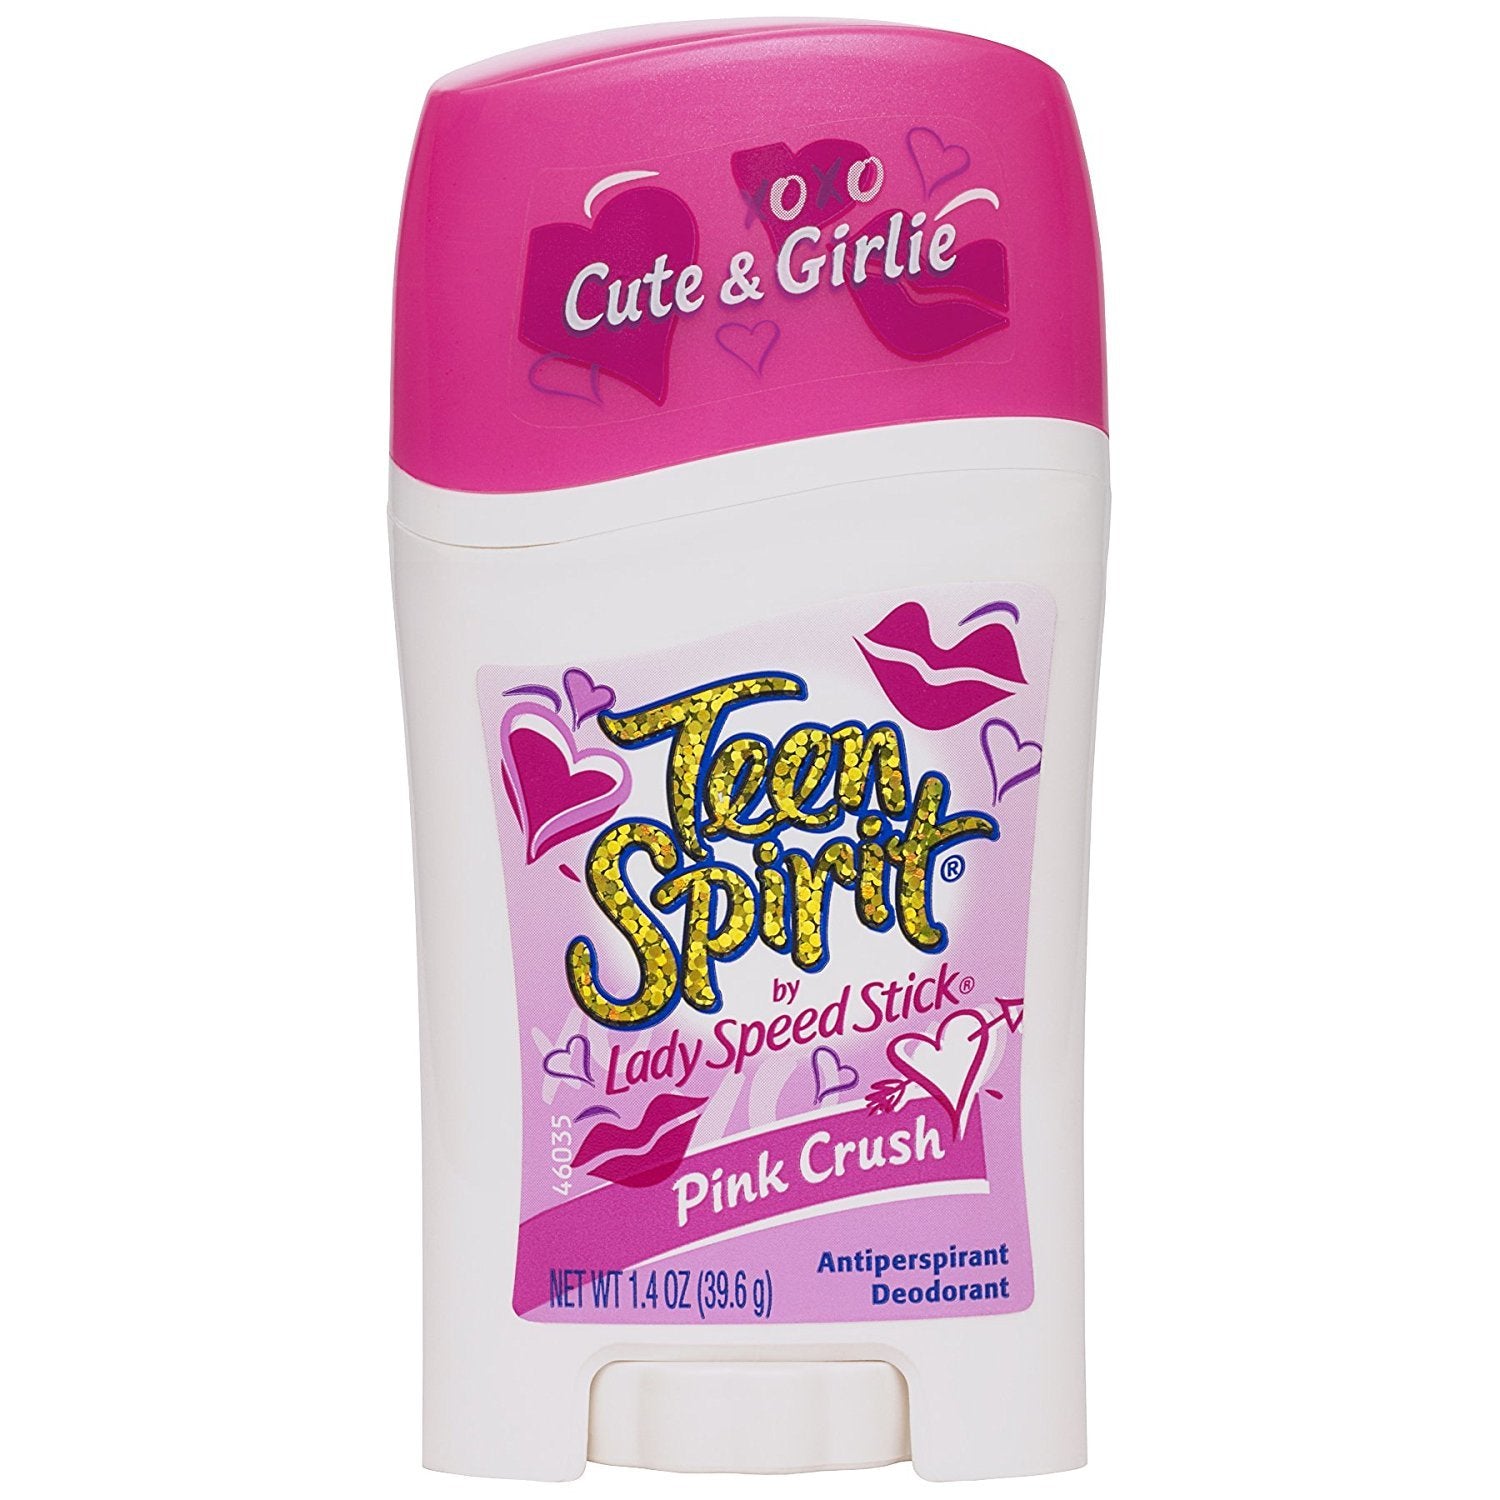 LADY Speed Stick A/P Deodorant Teen Spirit Pink Crush - 1.4oz/12pk